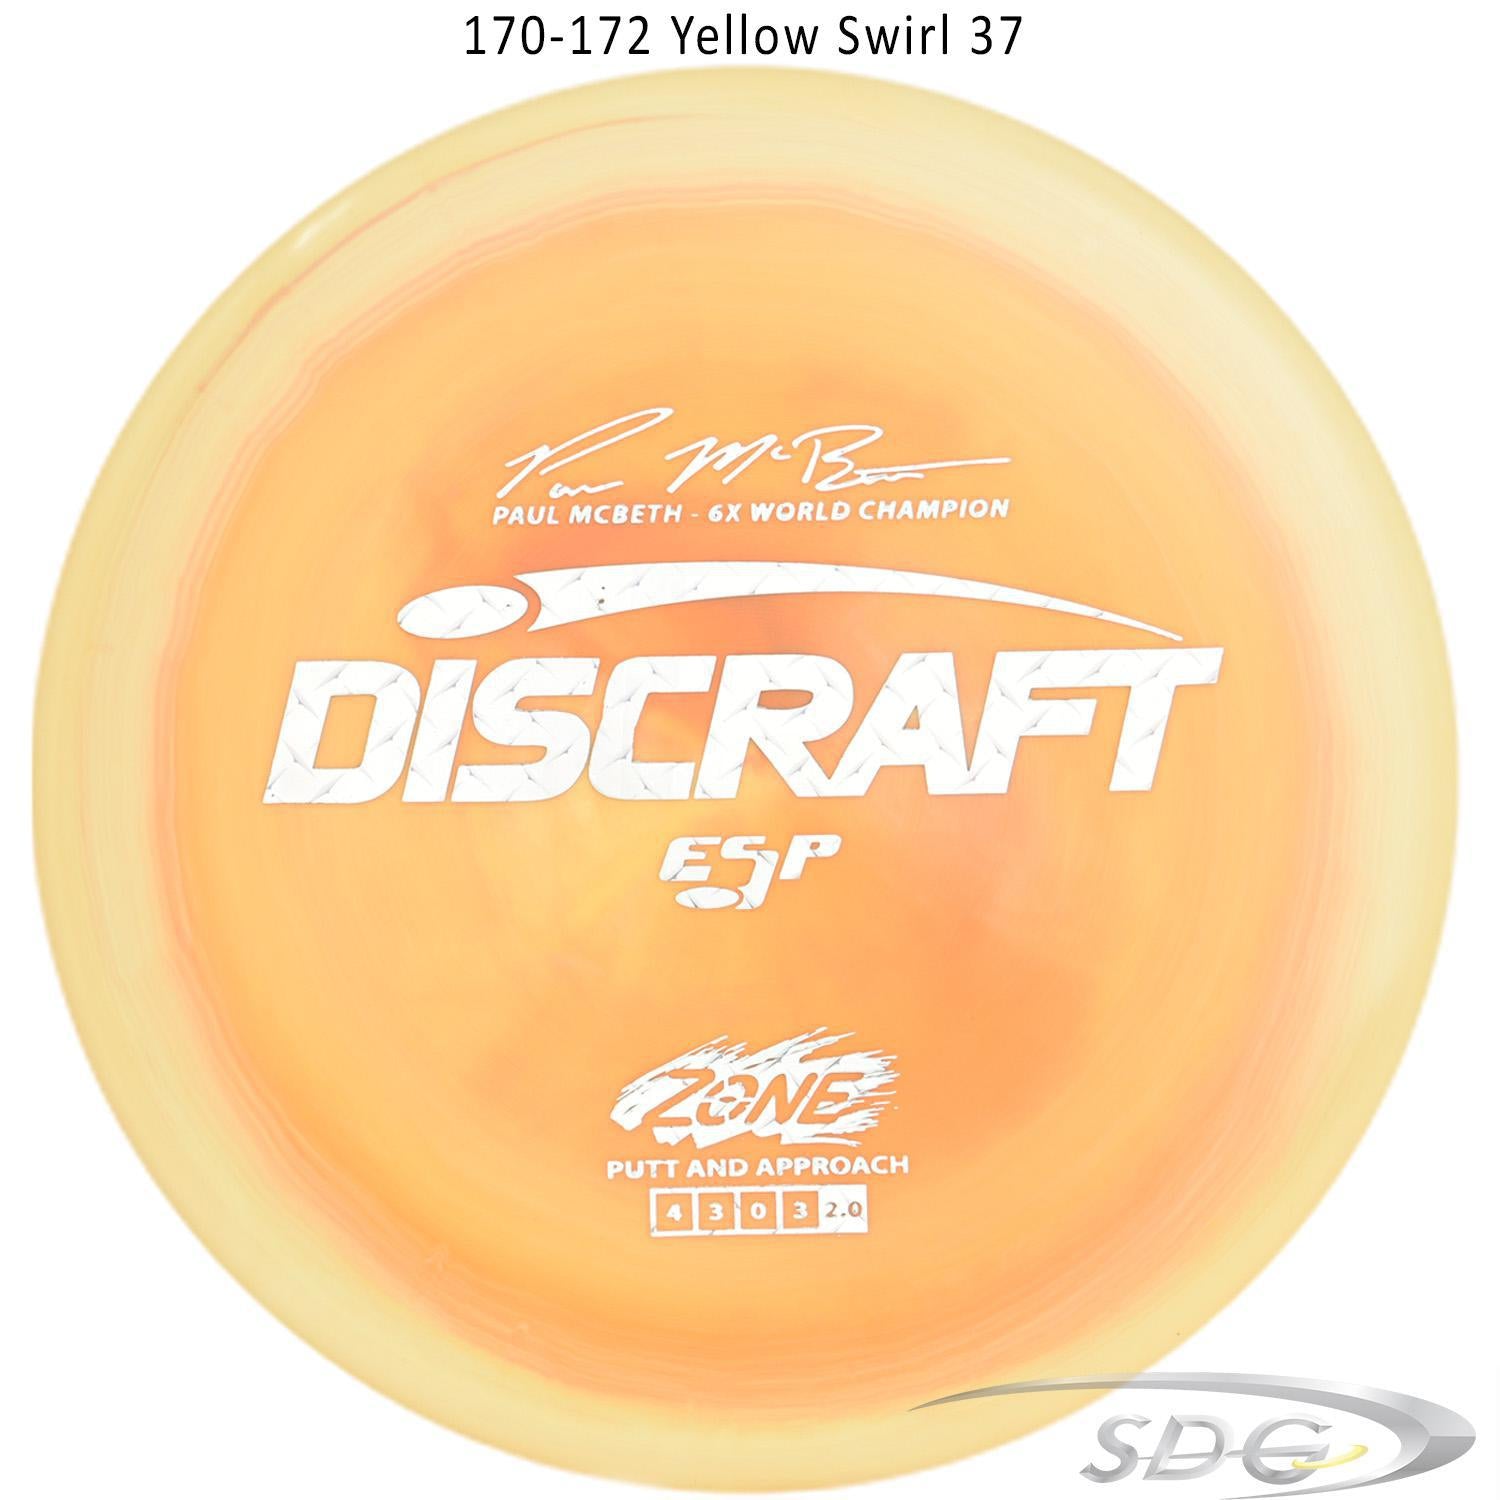 discraft-esp-zone-6x-paul-mcbeth-signature-series-disc-golf-putter-172-170-weights 170-172 Yellow Swirl 37 